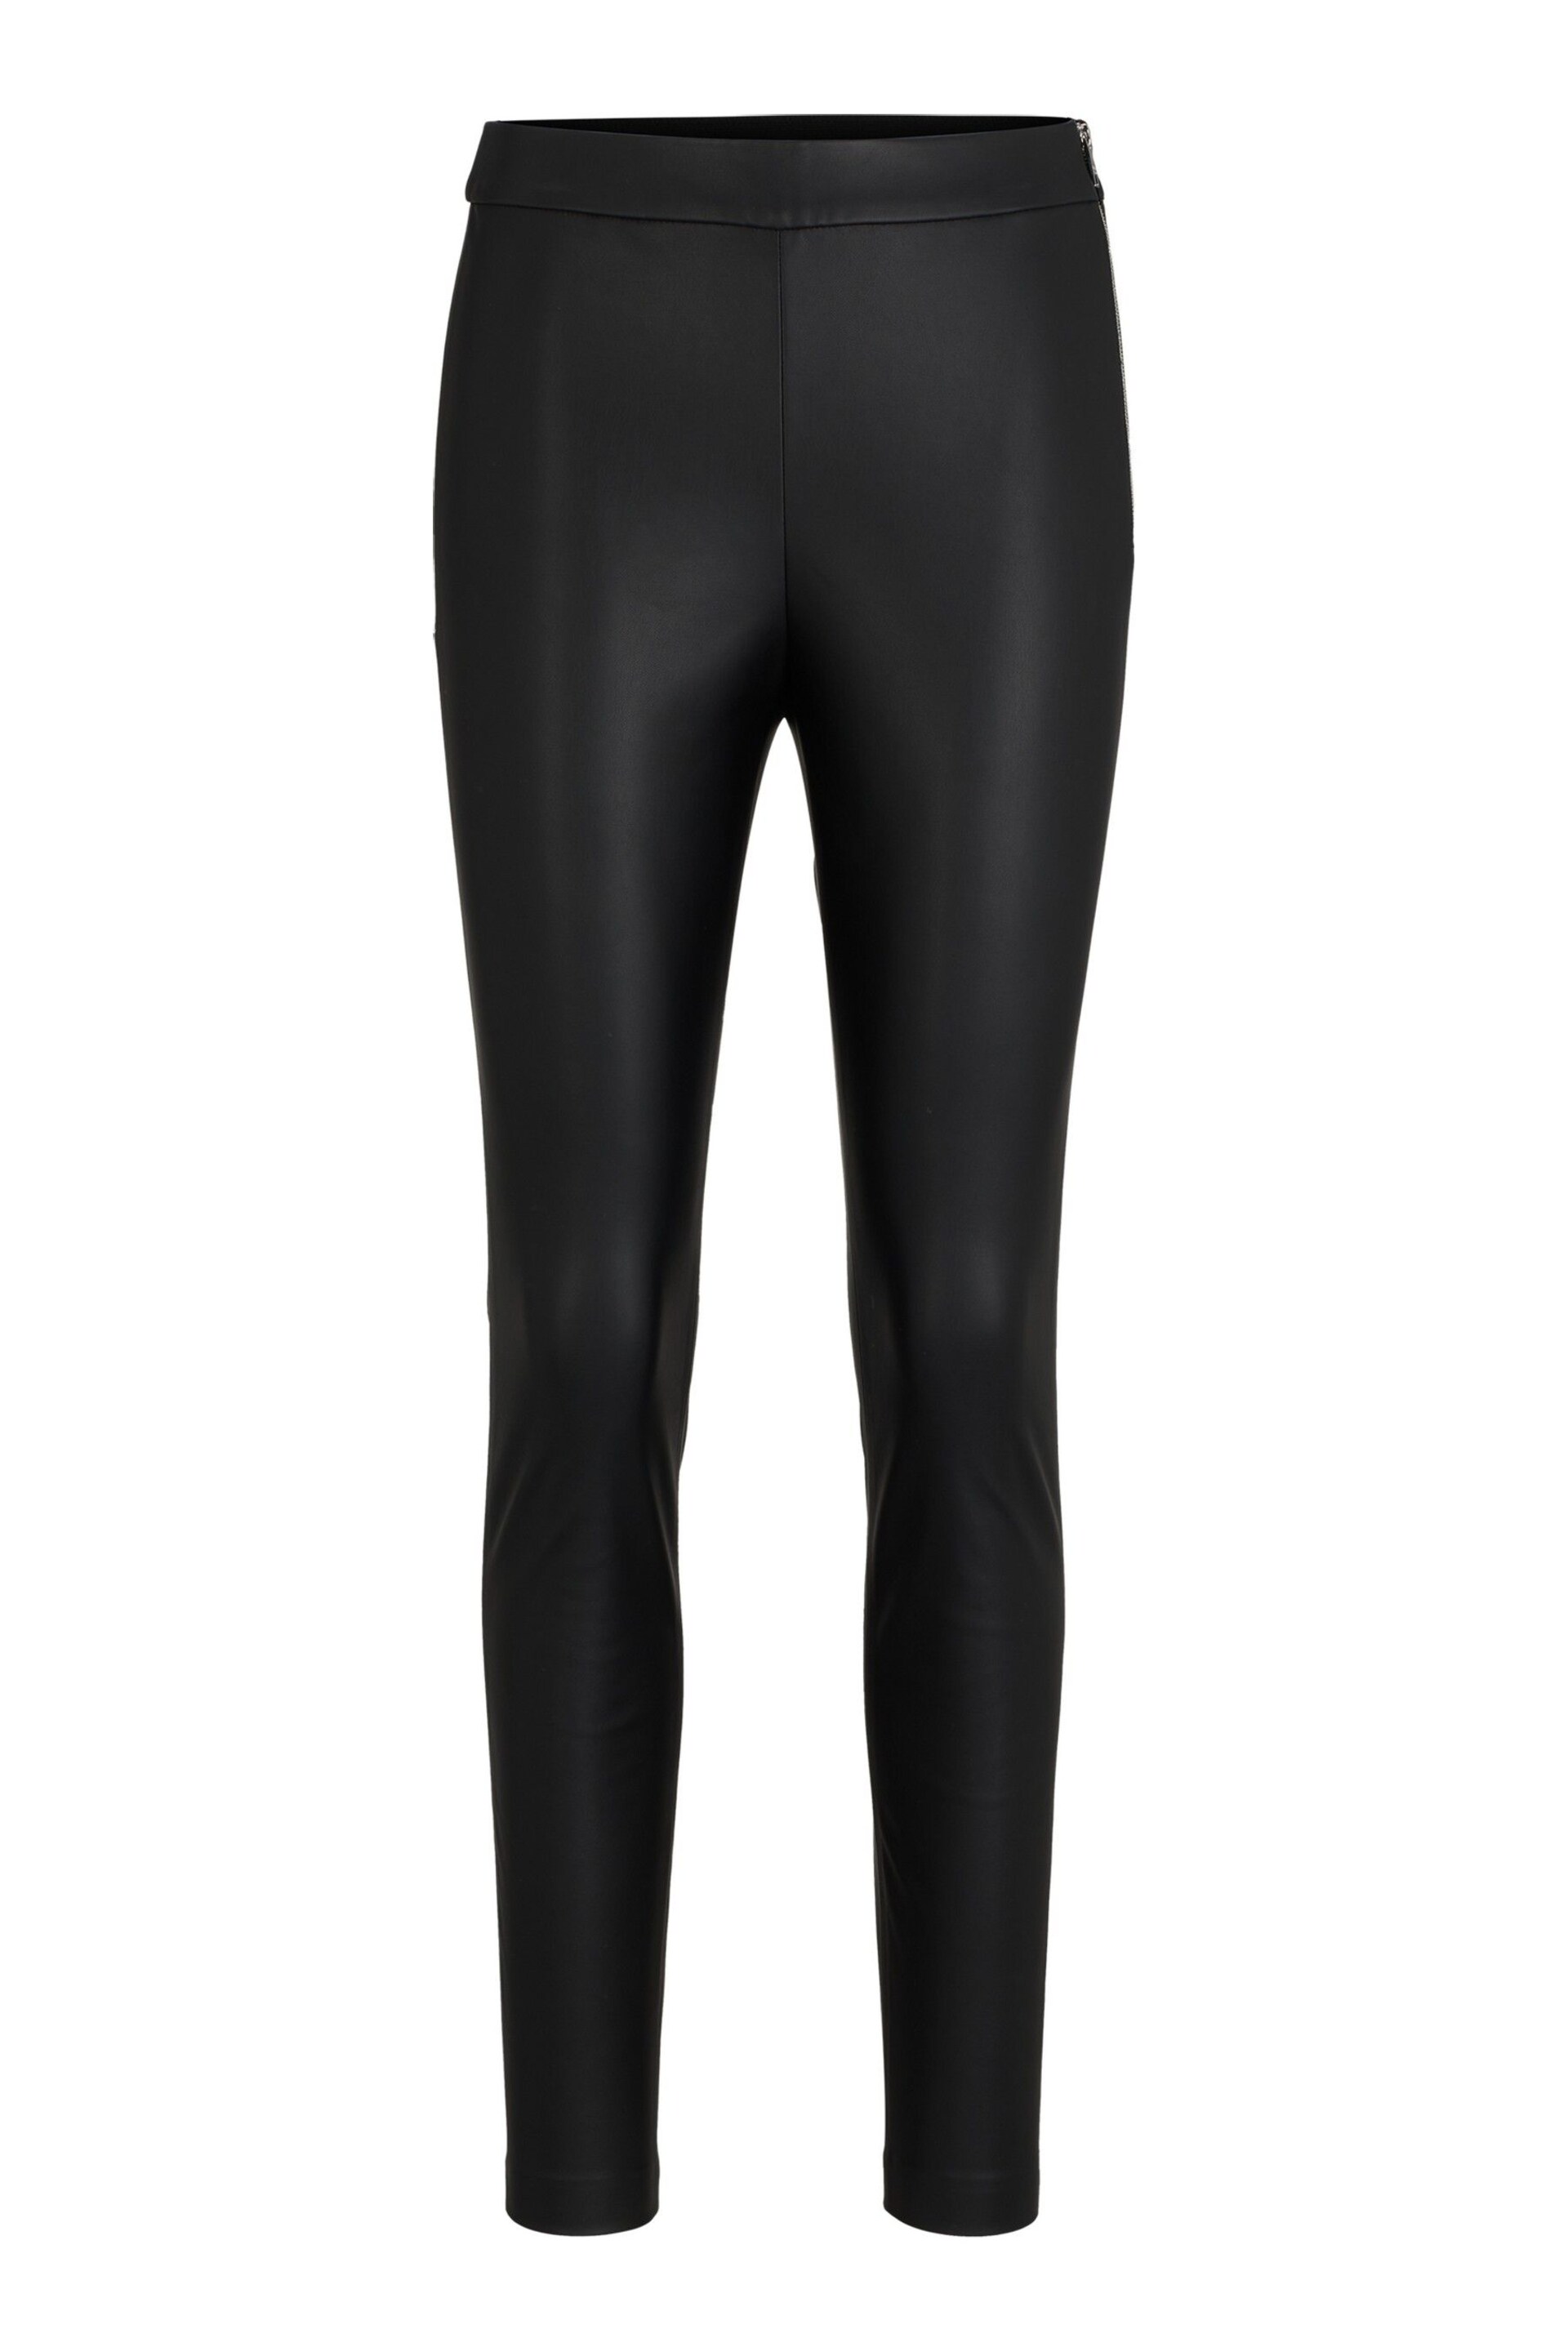 BOSS Black Taslimah Trousers - Image 5 of 5